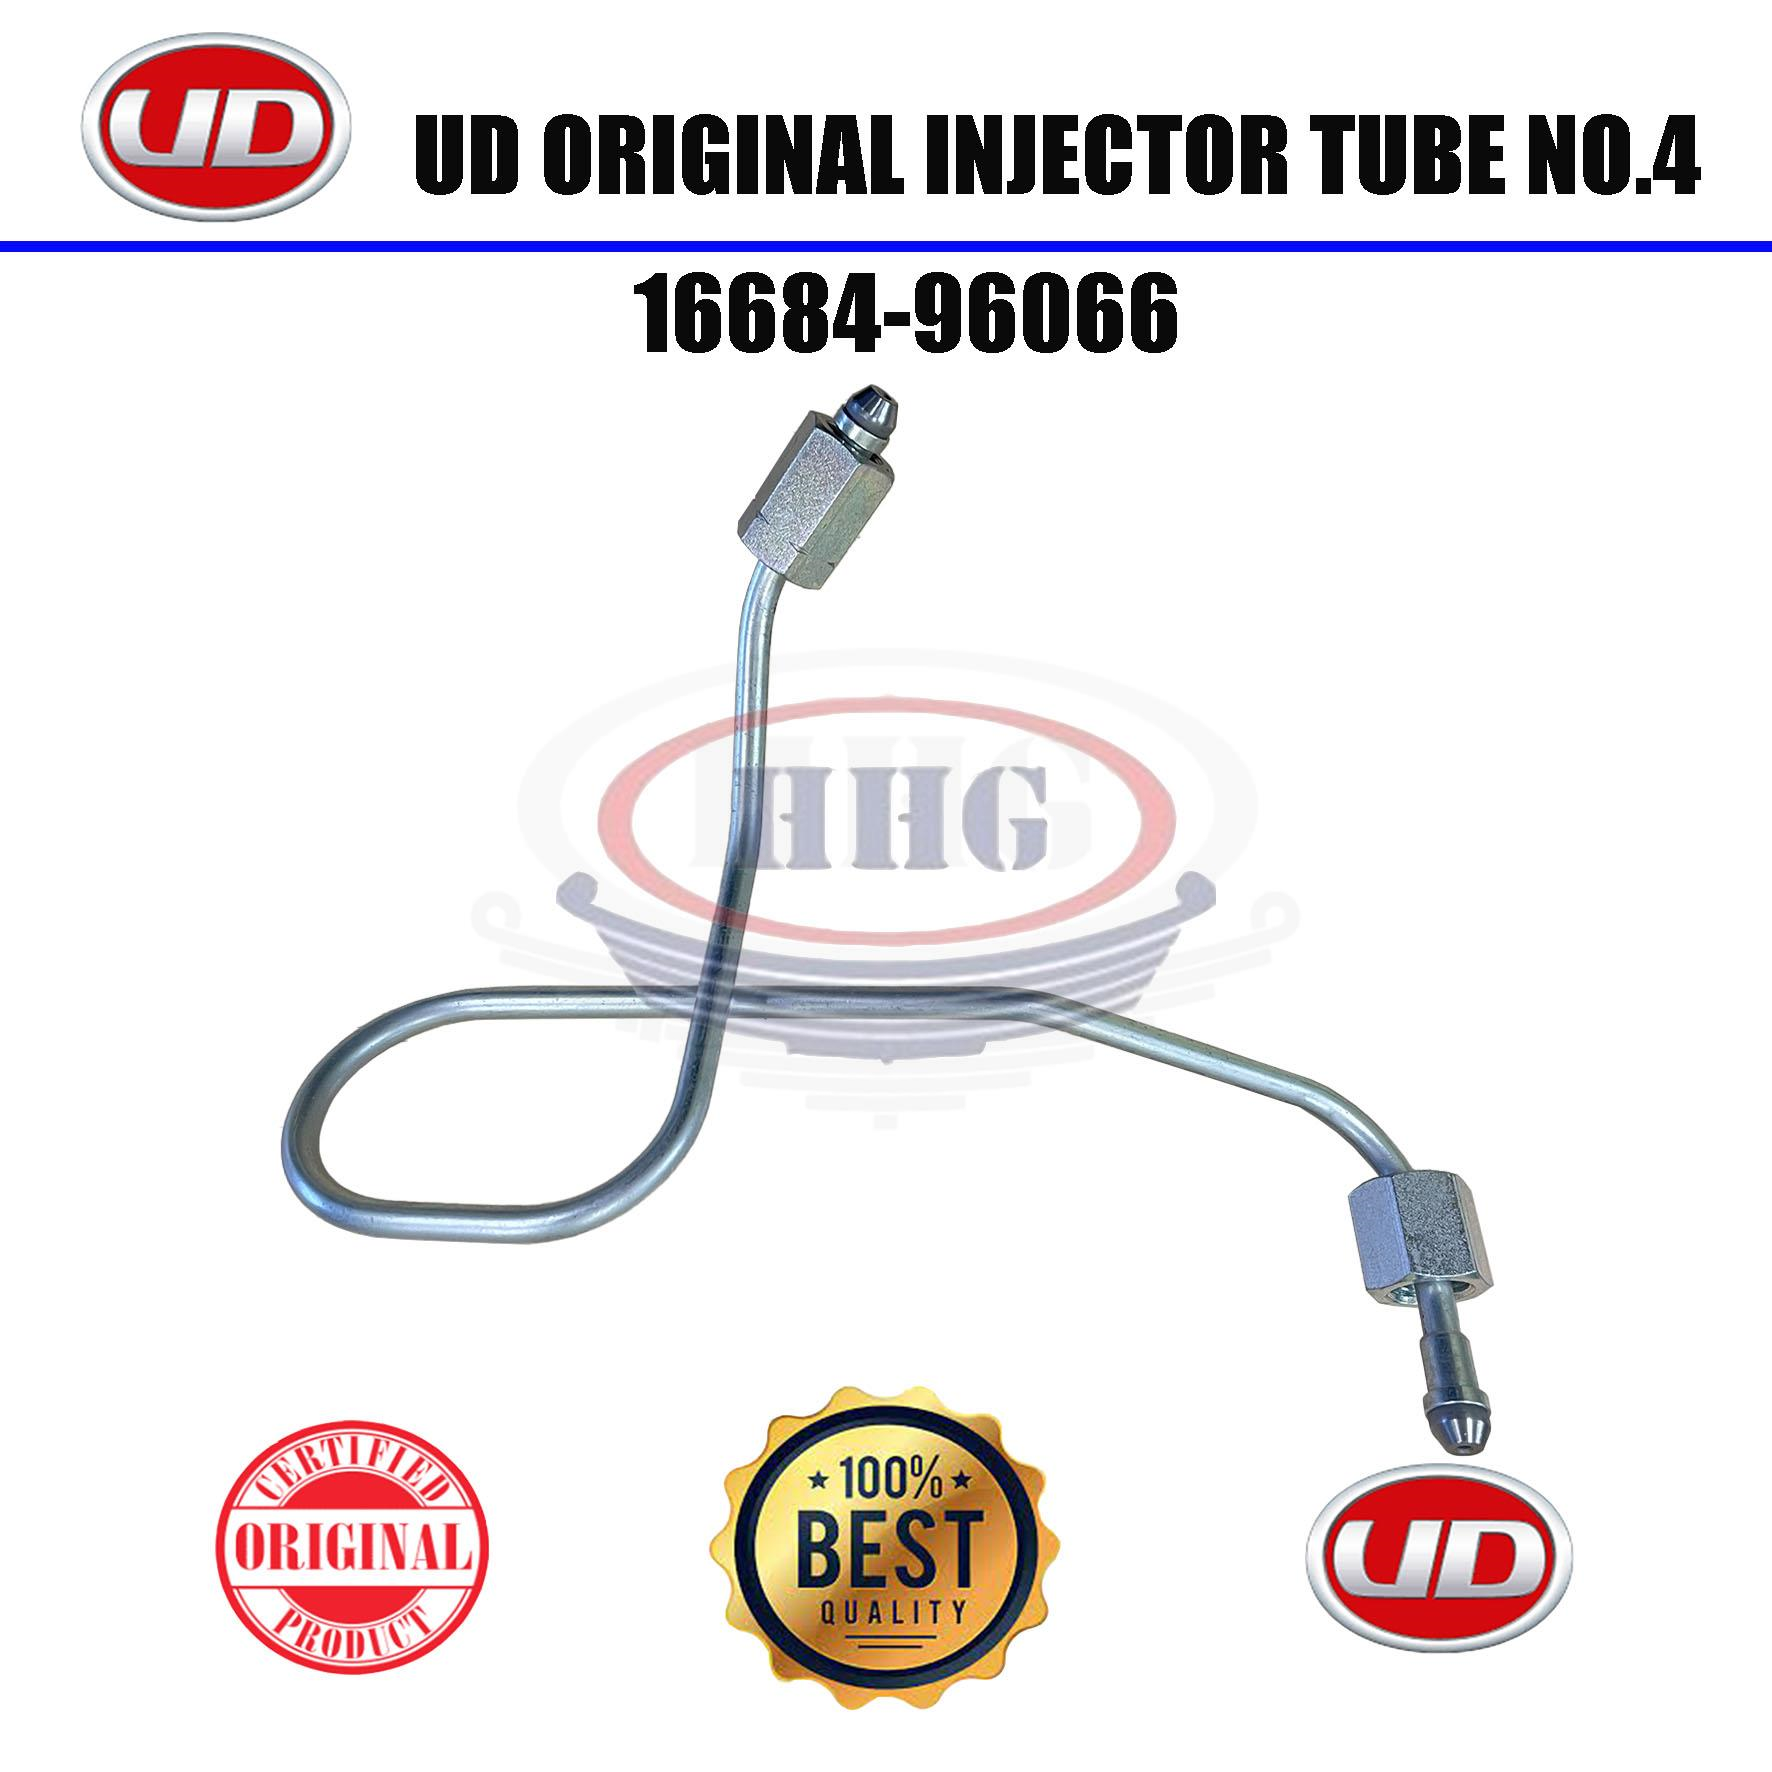 UD Original PE6T PF6 Injector Tube No.4 (16684-96066)